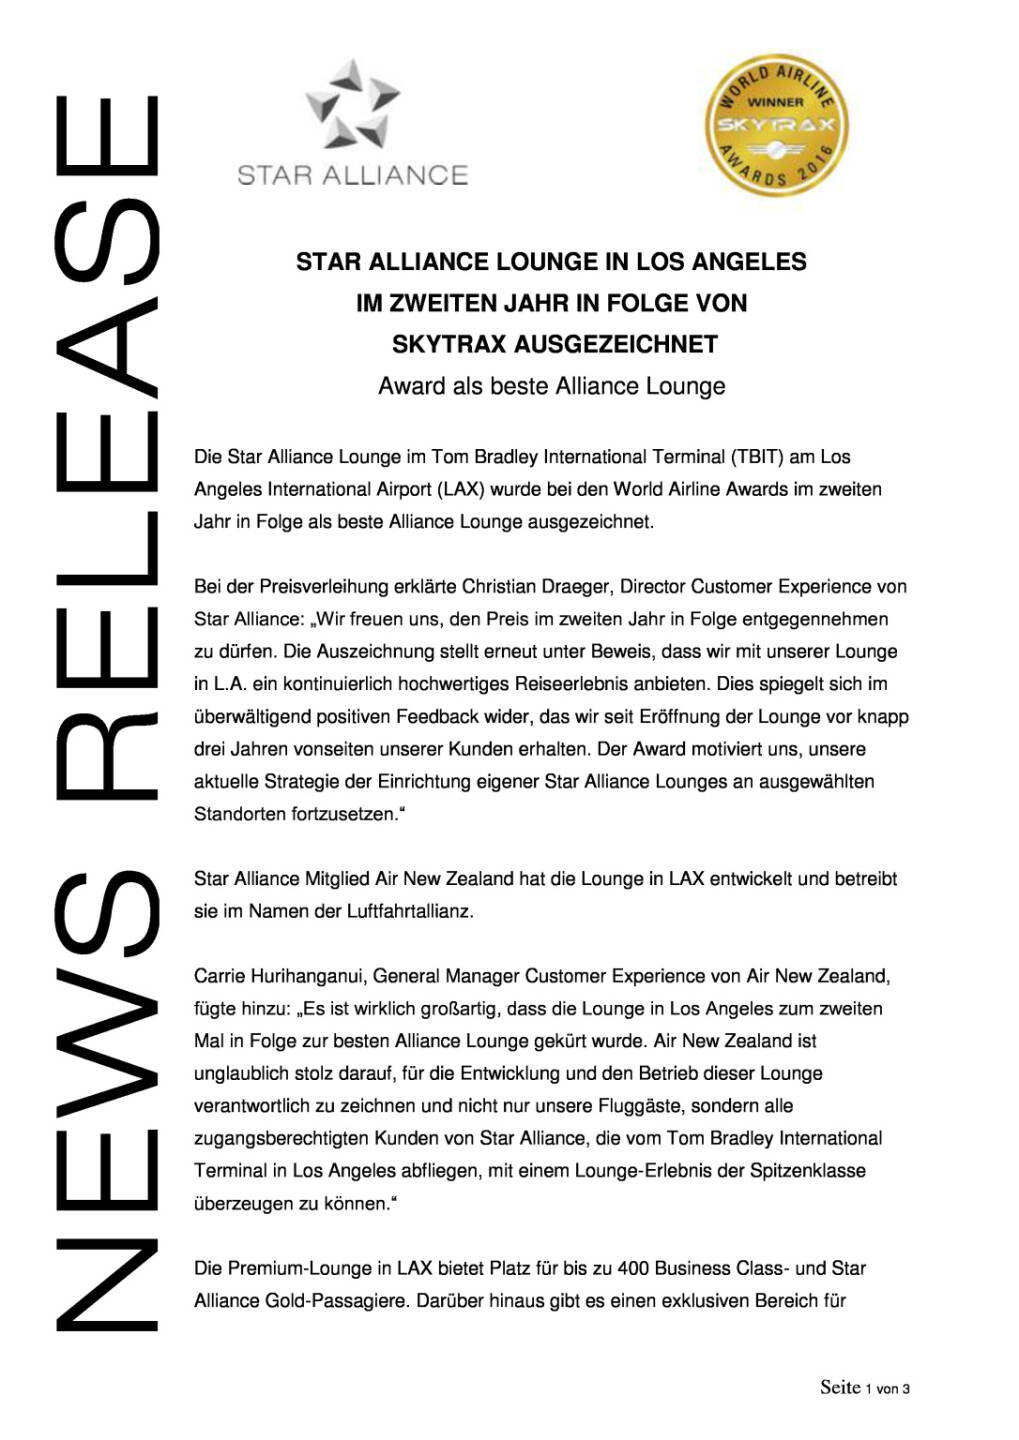 Star Alliance Lounge in Los Angeles: Award als beste Alliance Lounge, Seite 1/3, komplettes Dokument unter http://boerse-social.com/static/uploads/file_1423_star_alliance_lounge_in_los_angeles_award_als_beste_alliance_lounge.pdf